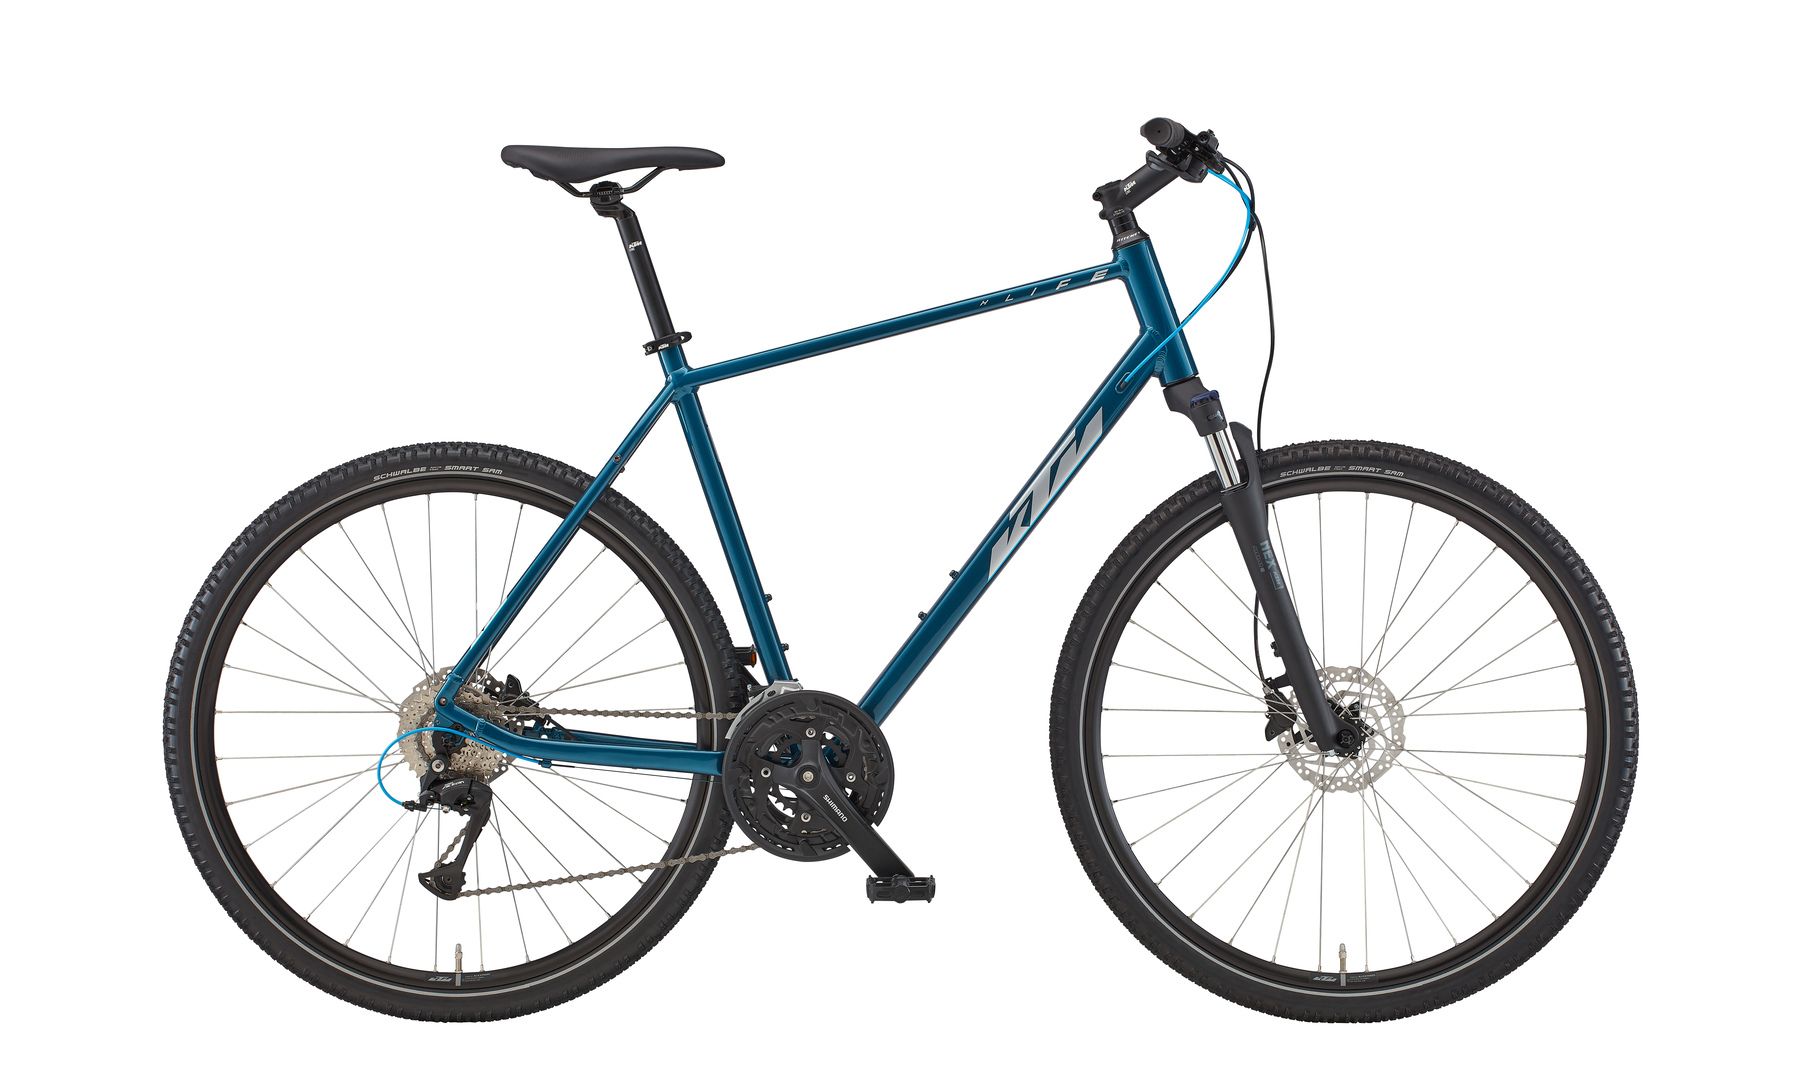 Bicycle KTM X-LIFE ROAD vital blue (silver+blue) 3x9 Shimano Alivio